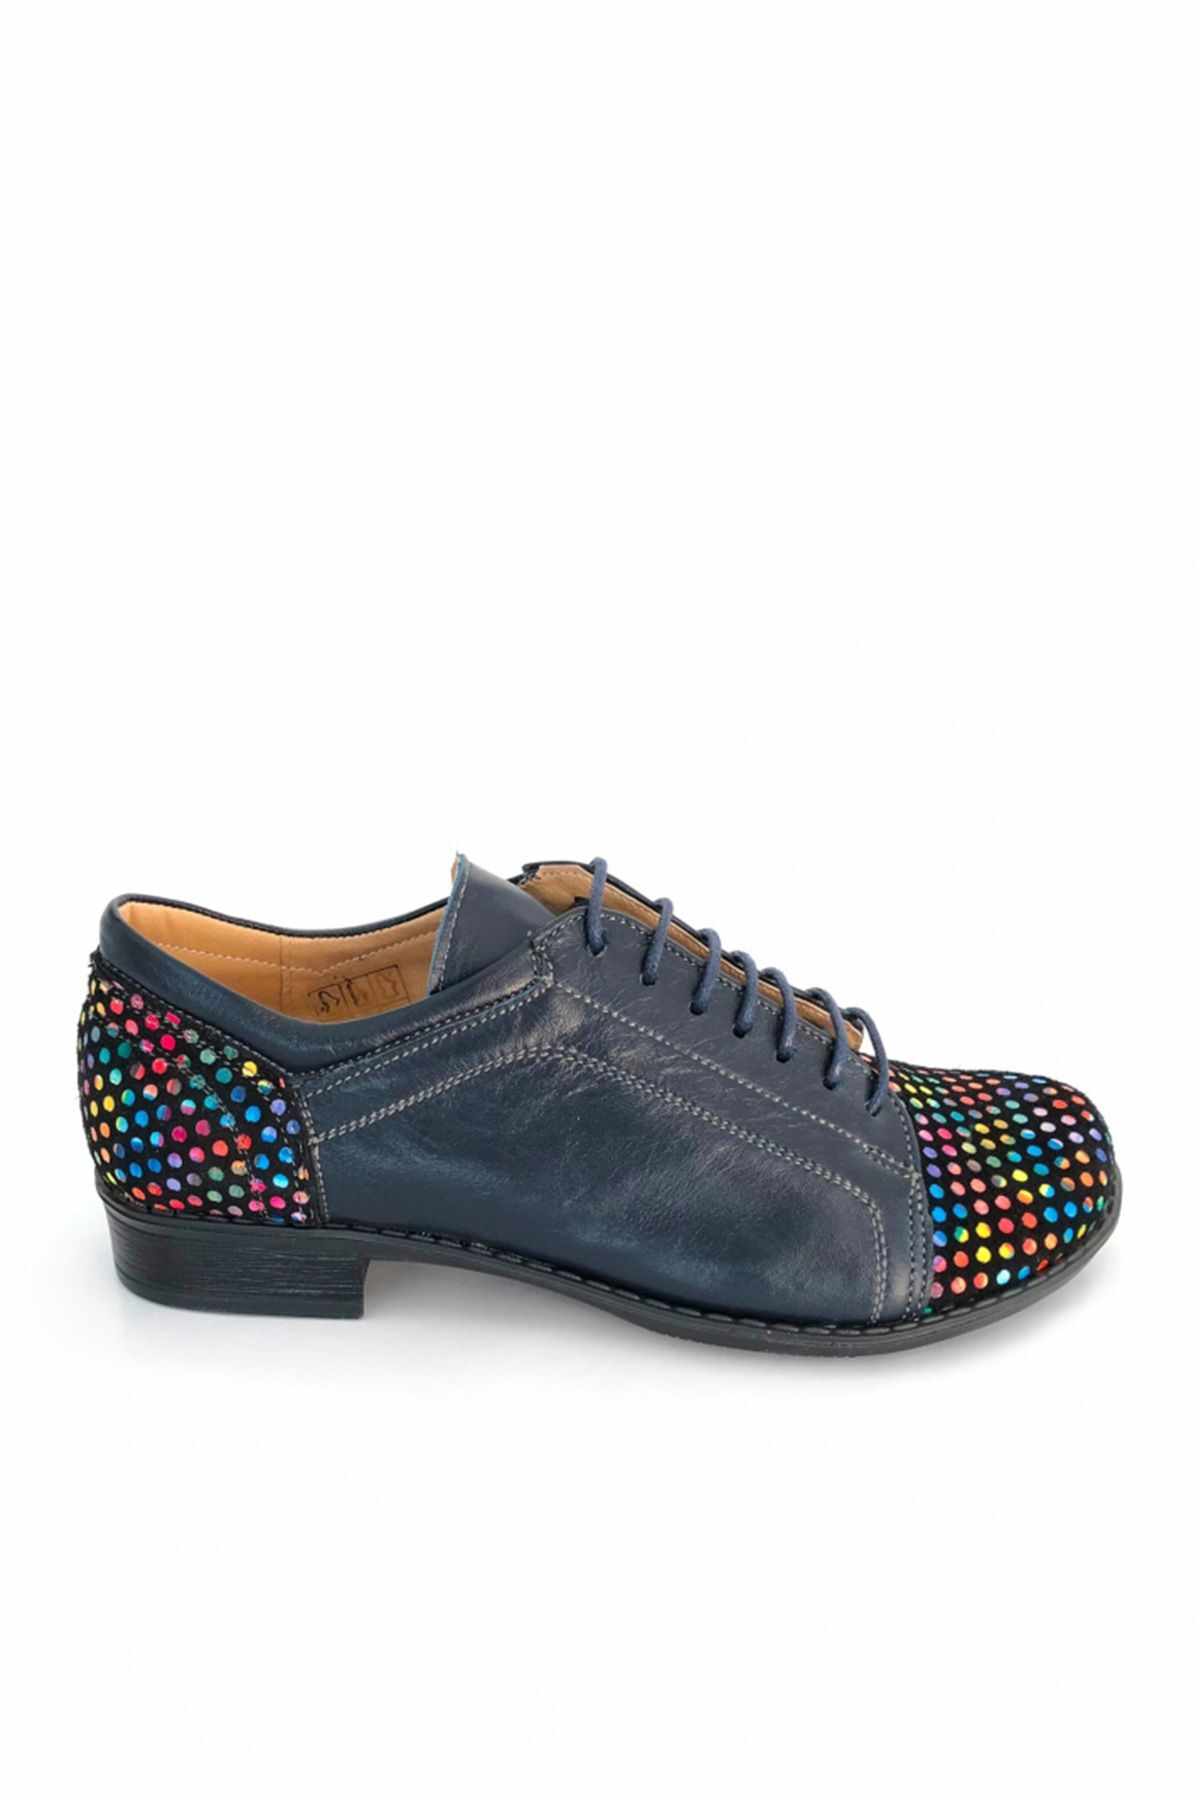 Pantofi bleumarin lati Priscila din piele naturala cu buline